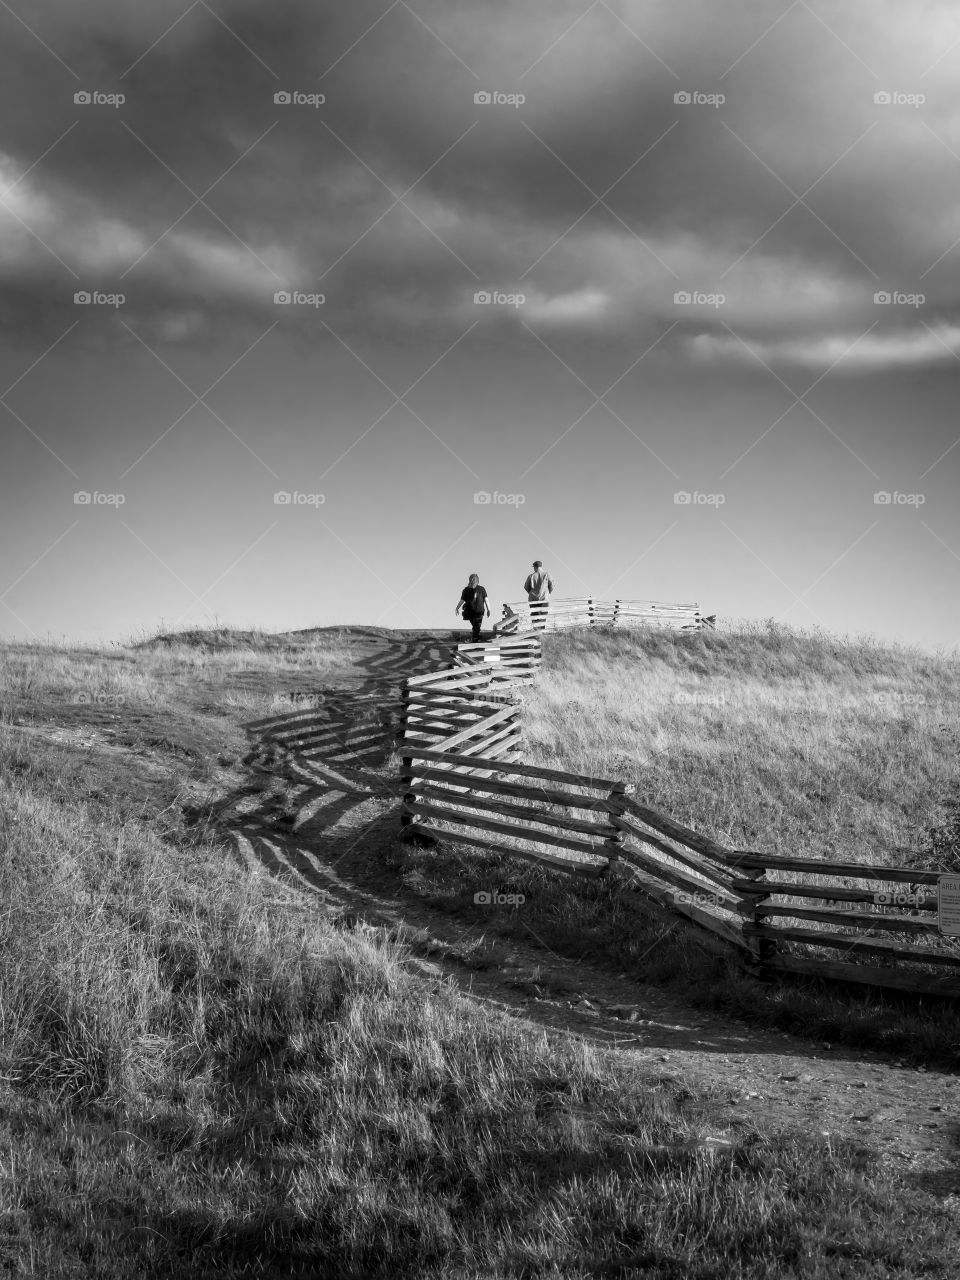 Dark cloud hangs overhead as couple walk up a winding path along a wooden fence